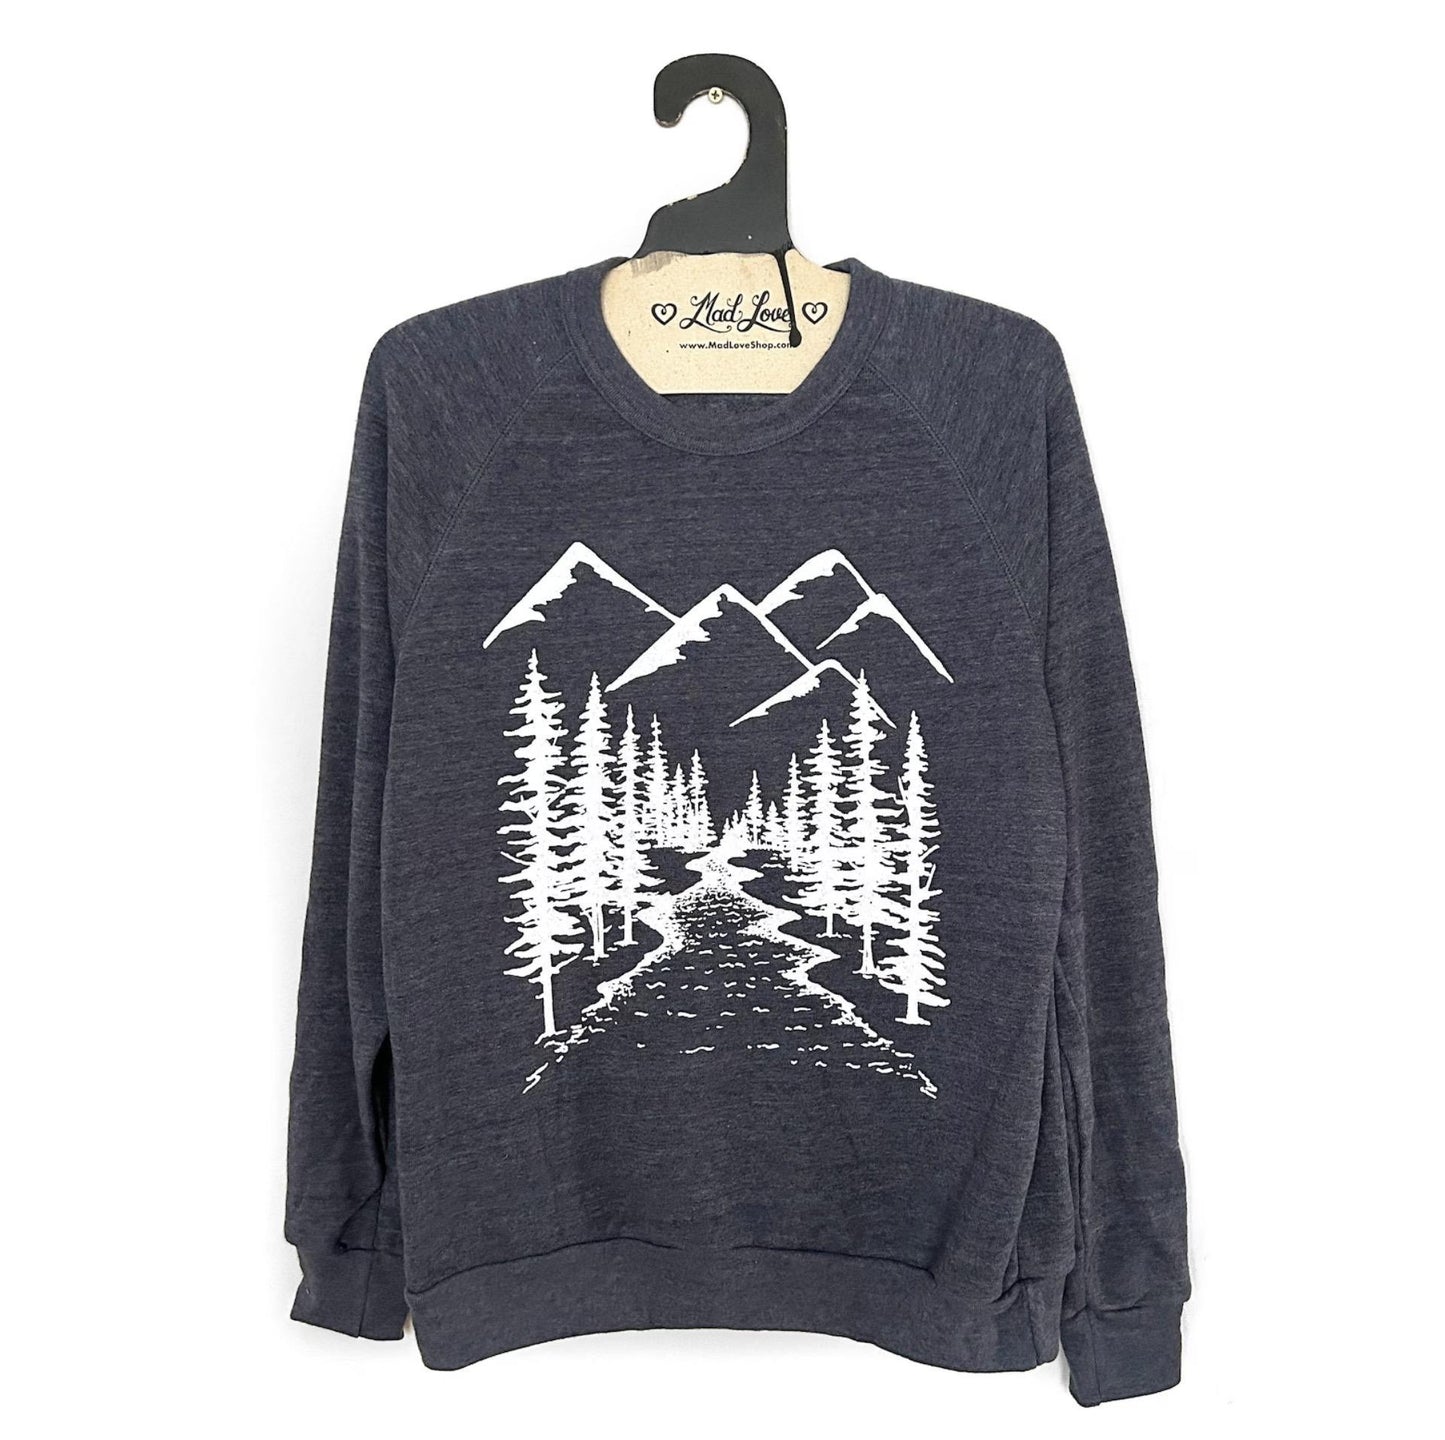 Mad Love Unisex Heather Navy Eco-Fleece Sweatshirt with Mountains - size Small